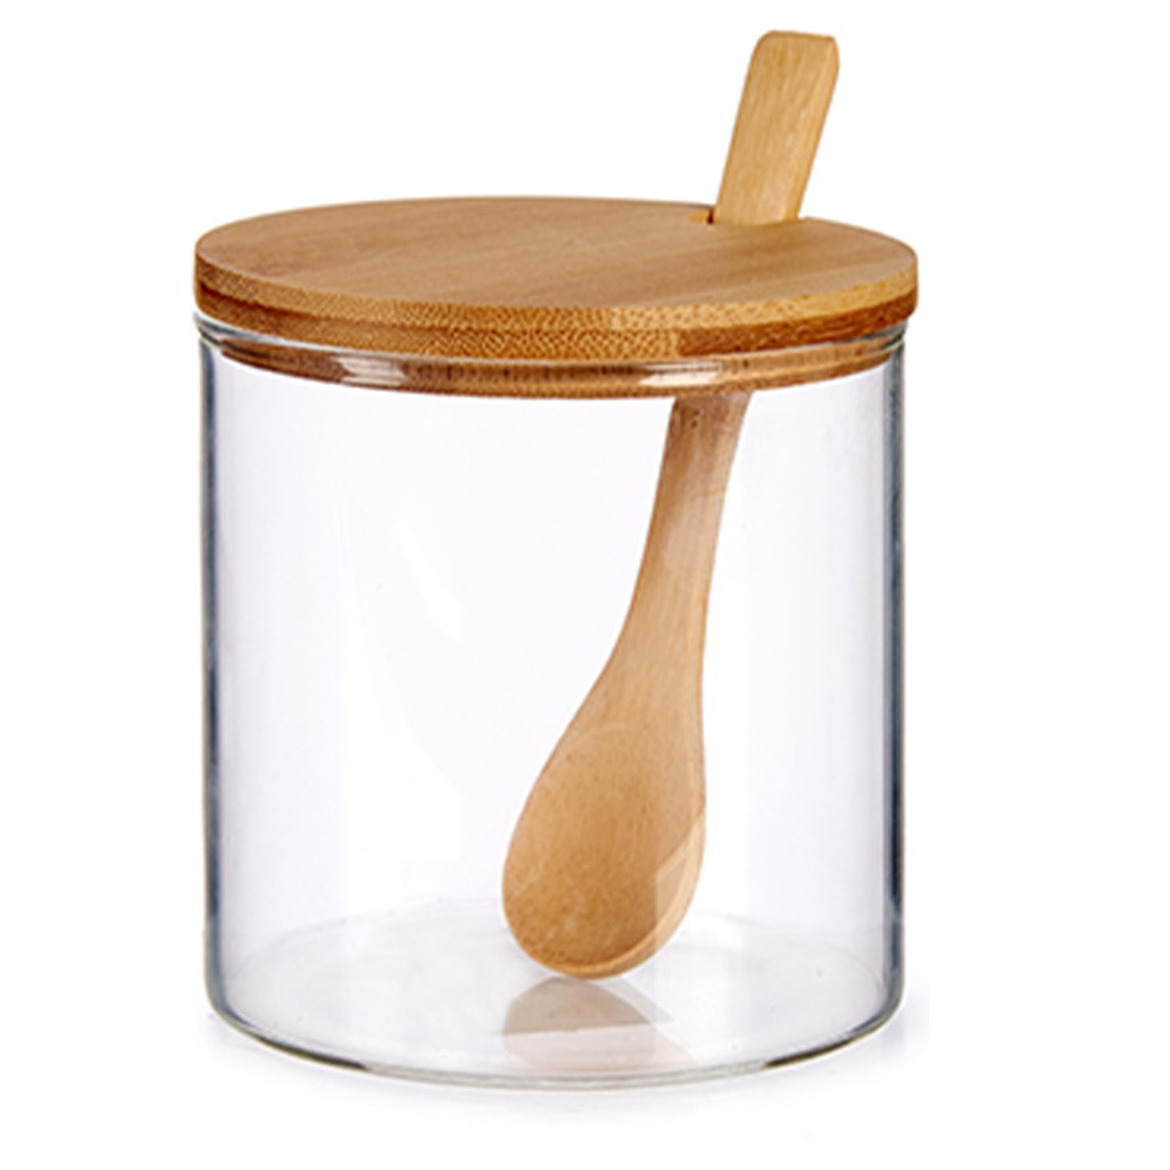 Suikerkom-suikerpotje glas met bamboe houten lepel en deksel 520 ML